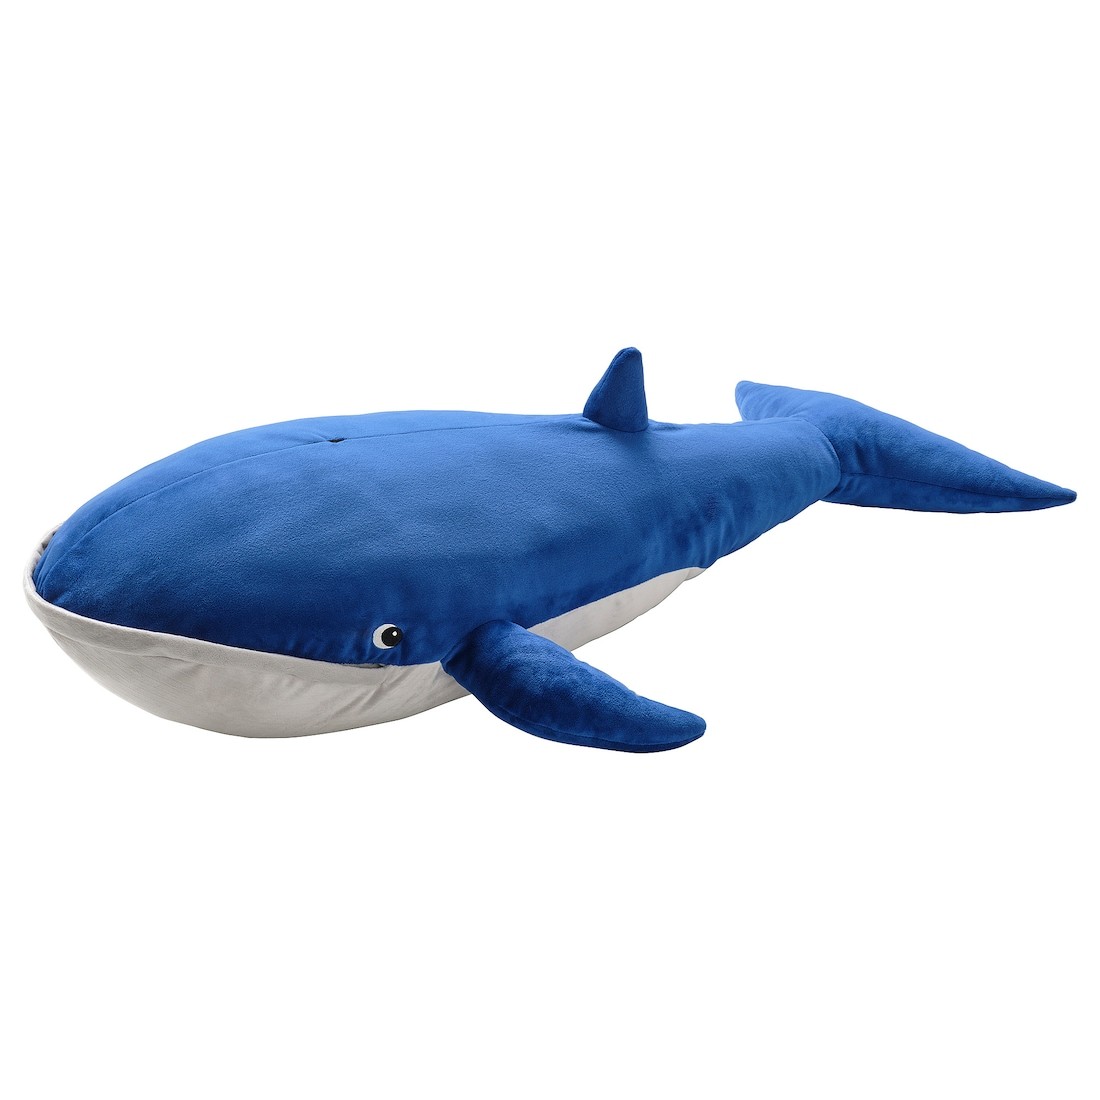 IKEA BLÅVINGAD Іграшка м’яка, синій кит, 100 см 00522113 005.221.13